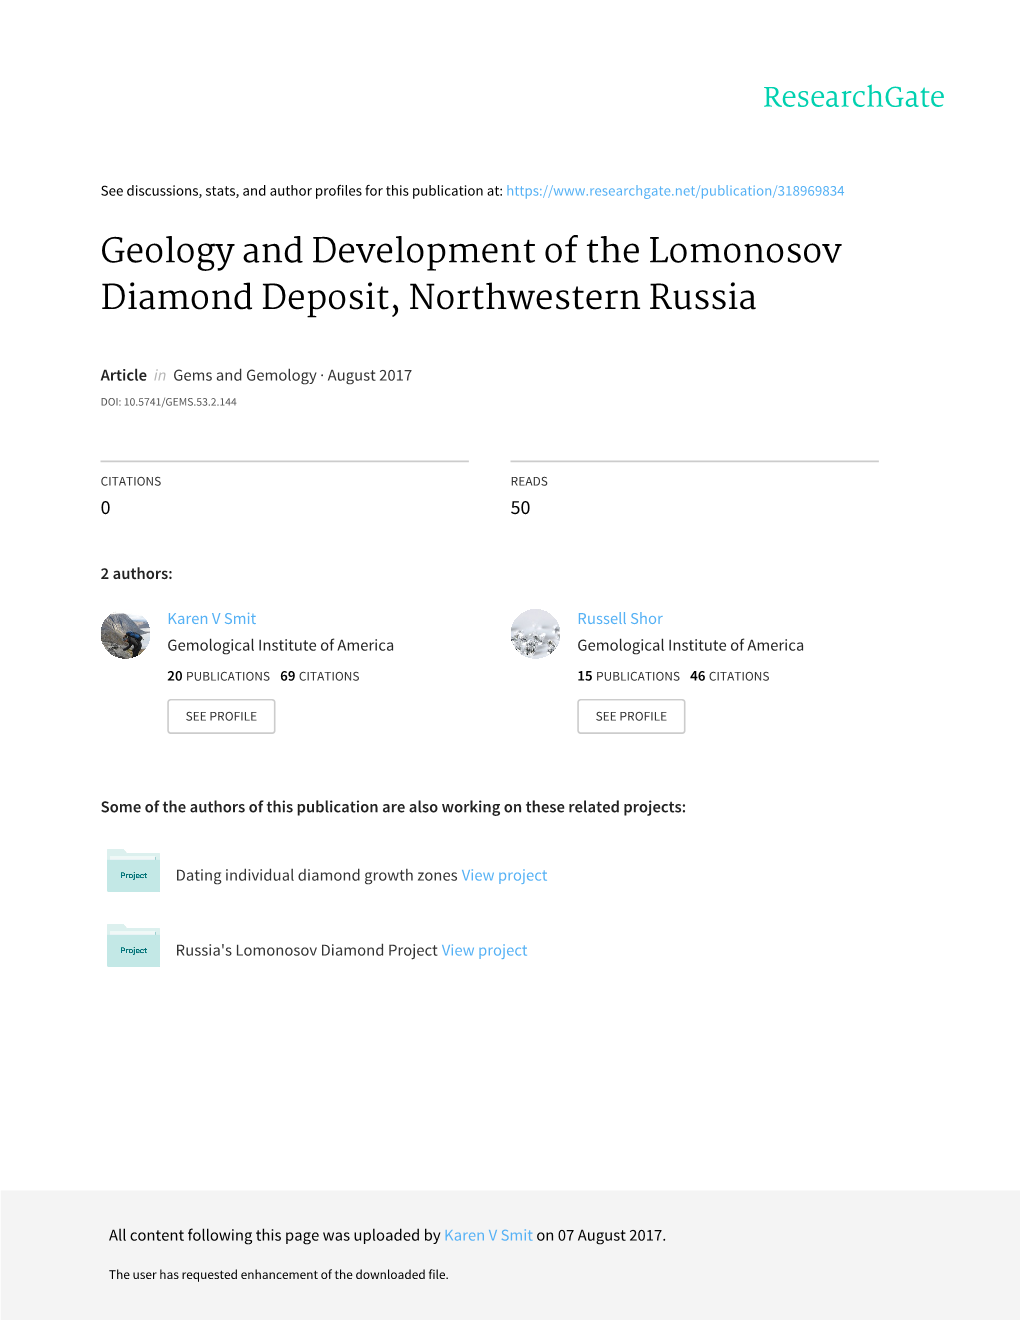 Geology and Development of the Lomonosov Diamond Deposit, Northwestern Russia